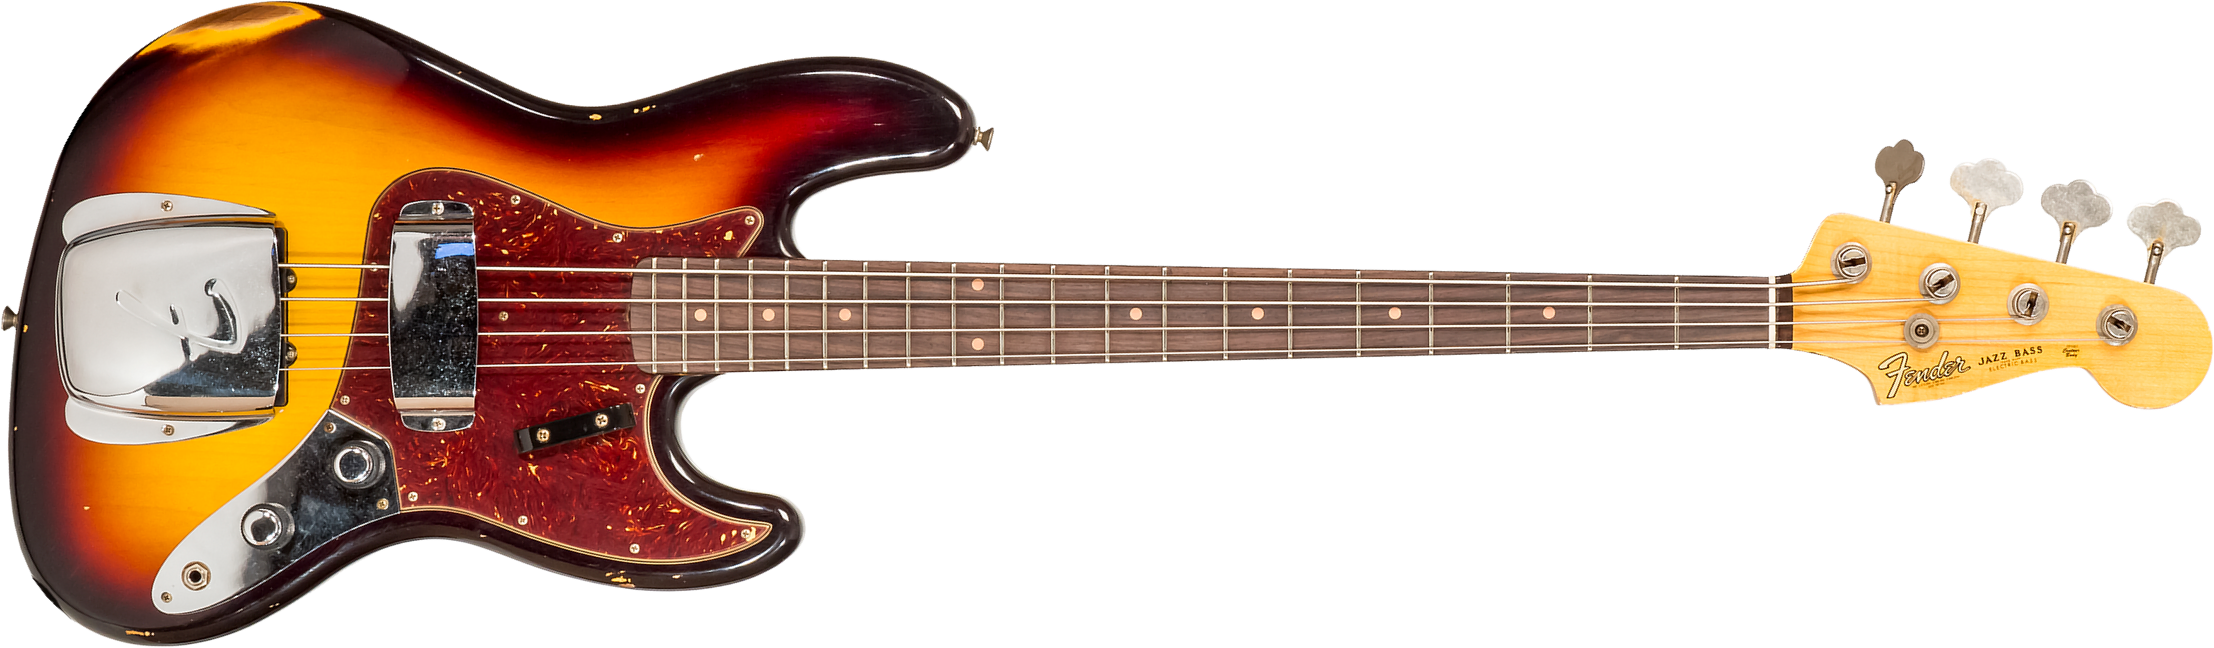 Fender Custom Shop  Jazz Bass 1962 Rw #cz569015 - Relic 3-color Sunburst - Solid body electric bass - Main picture